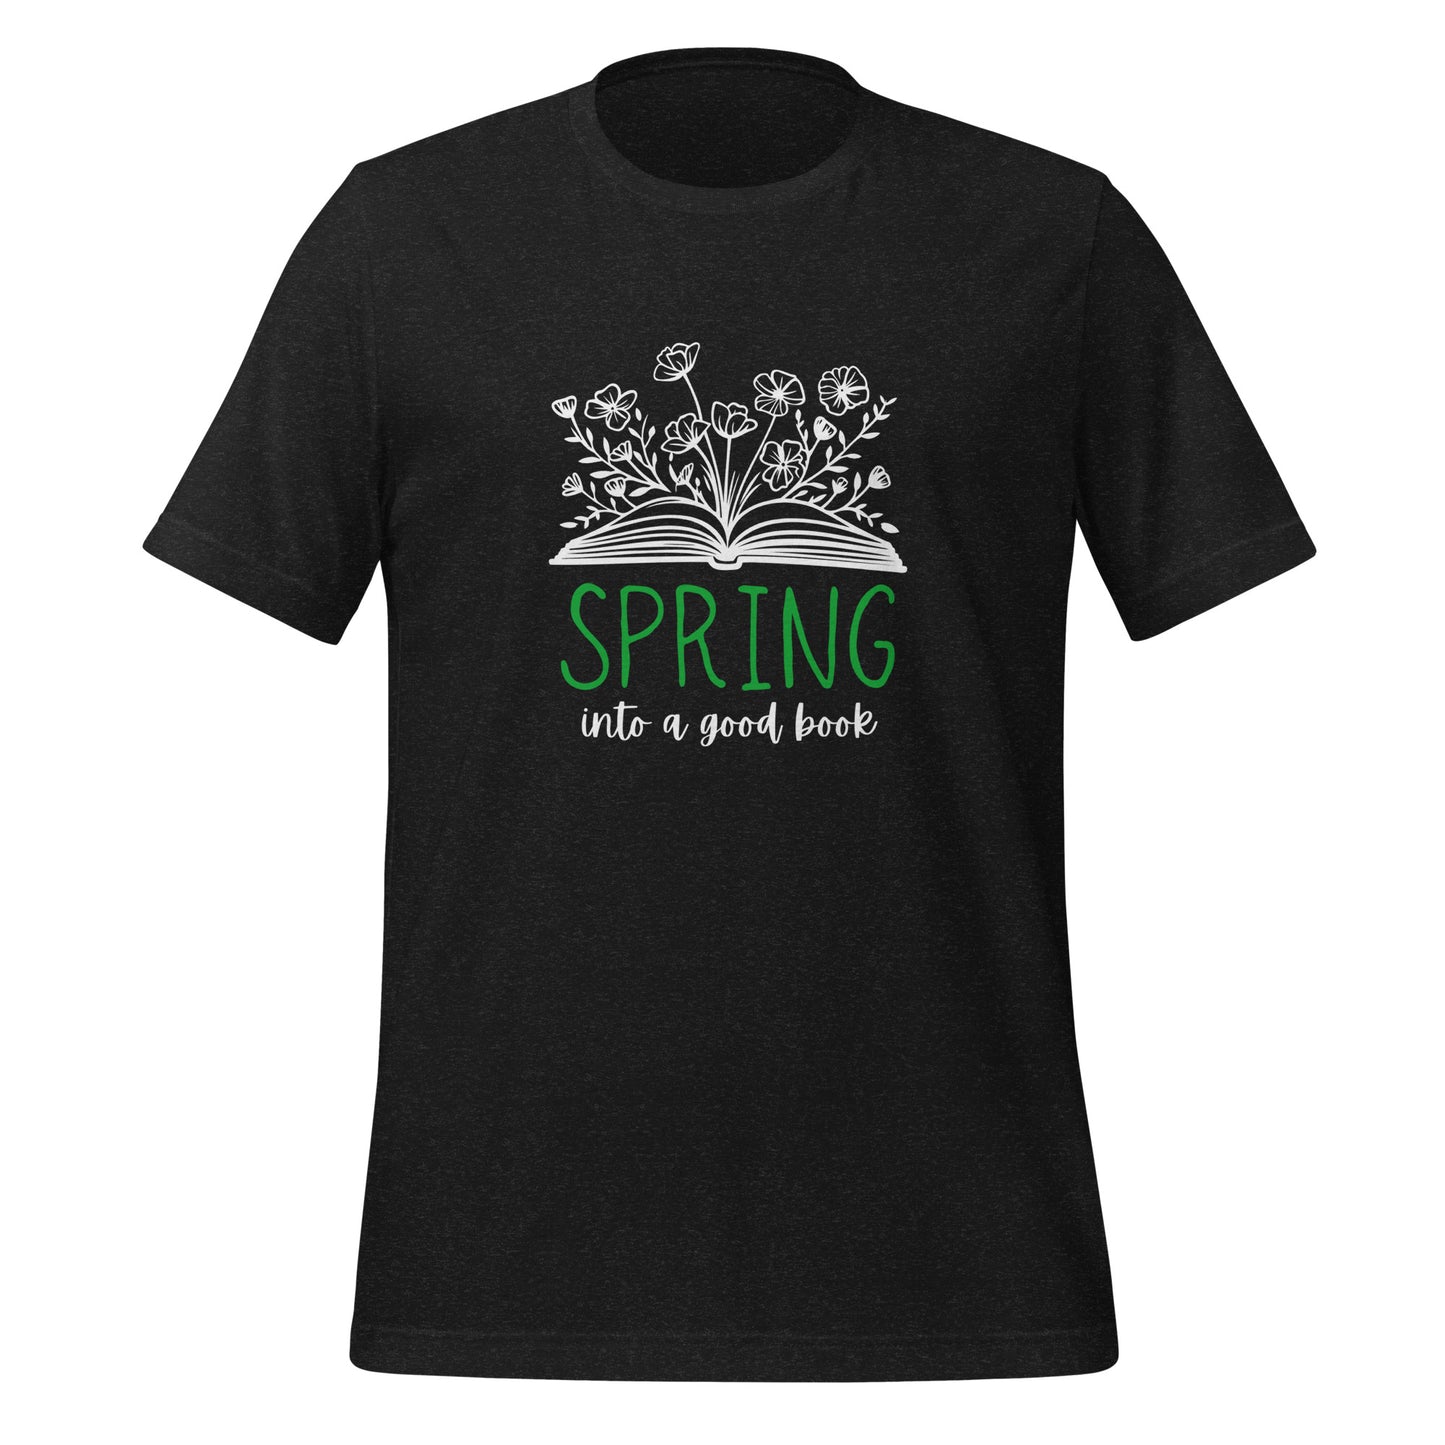 "Spring into a Good Book" T-Shirt